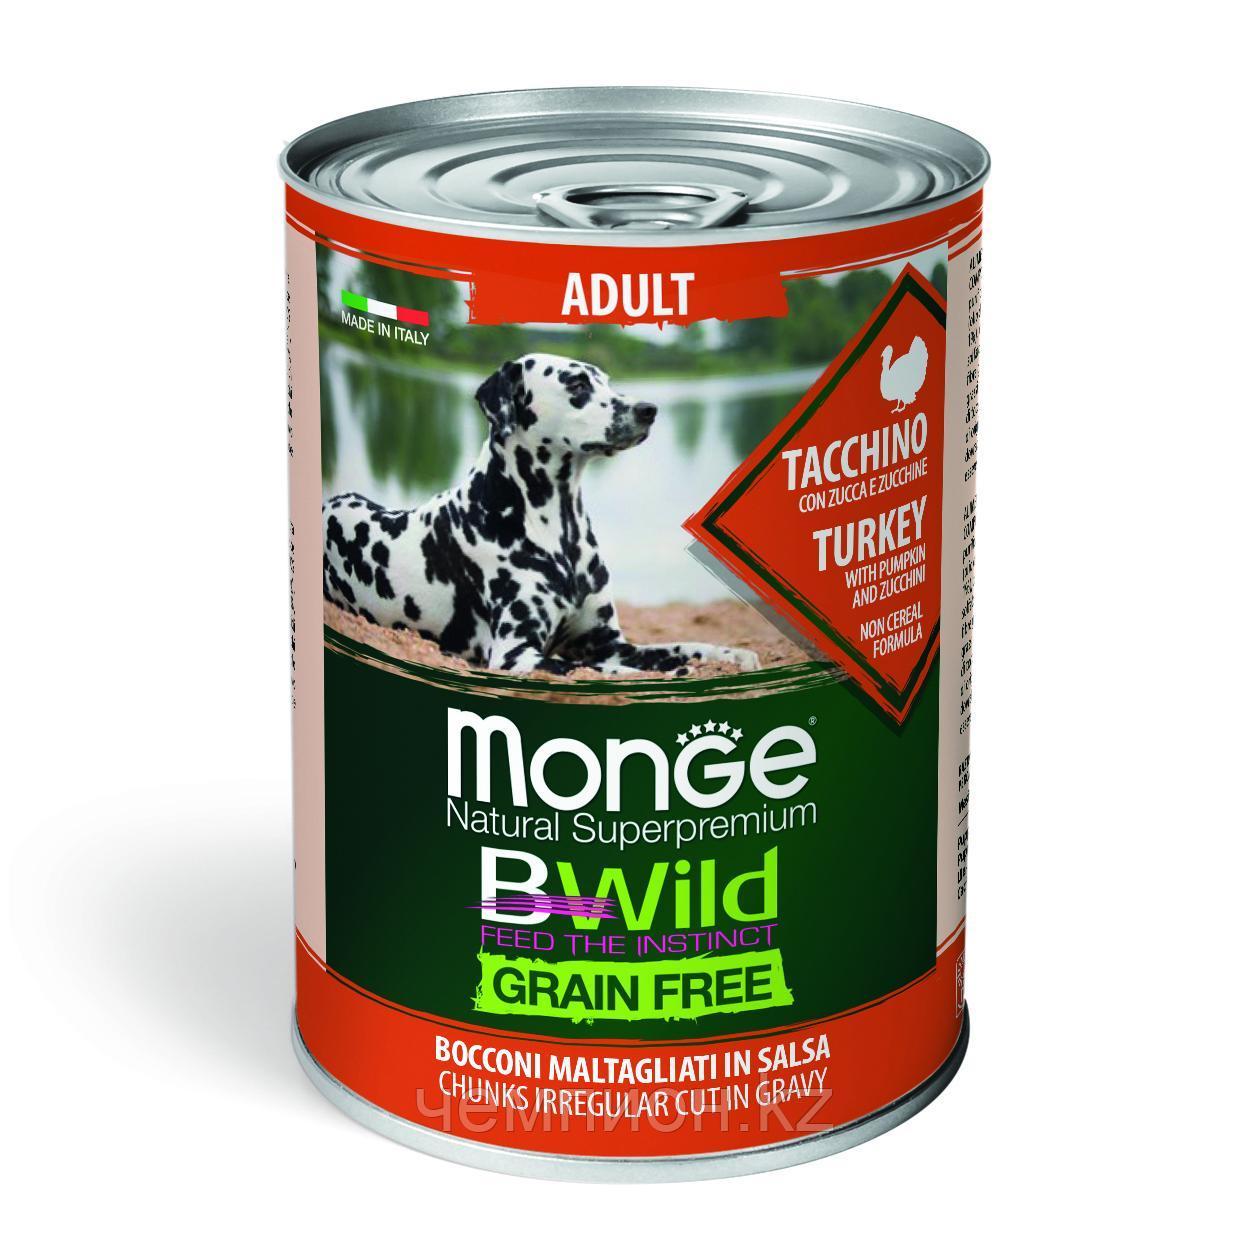 2645 Monge BWild GF, All Bread Adult Turkey, влажный корм для взрослых собак всех пород, индейка, банка 400гр.